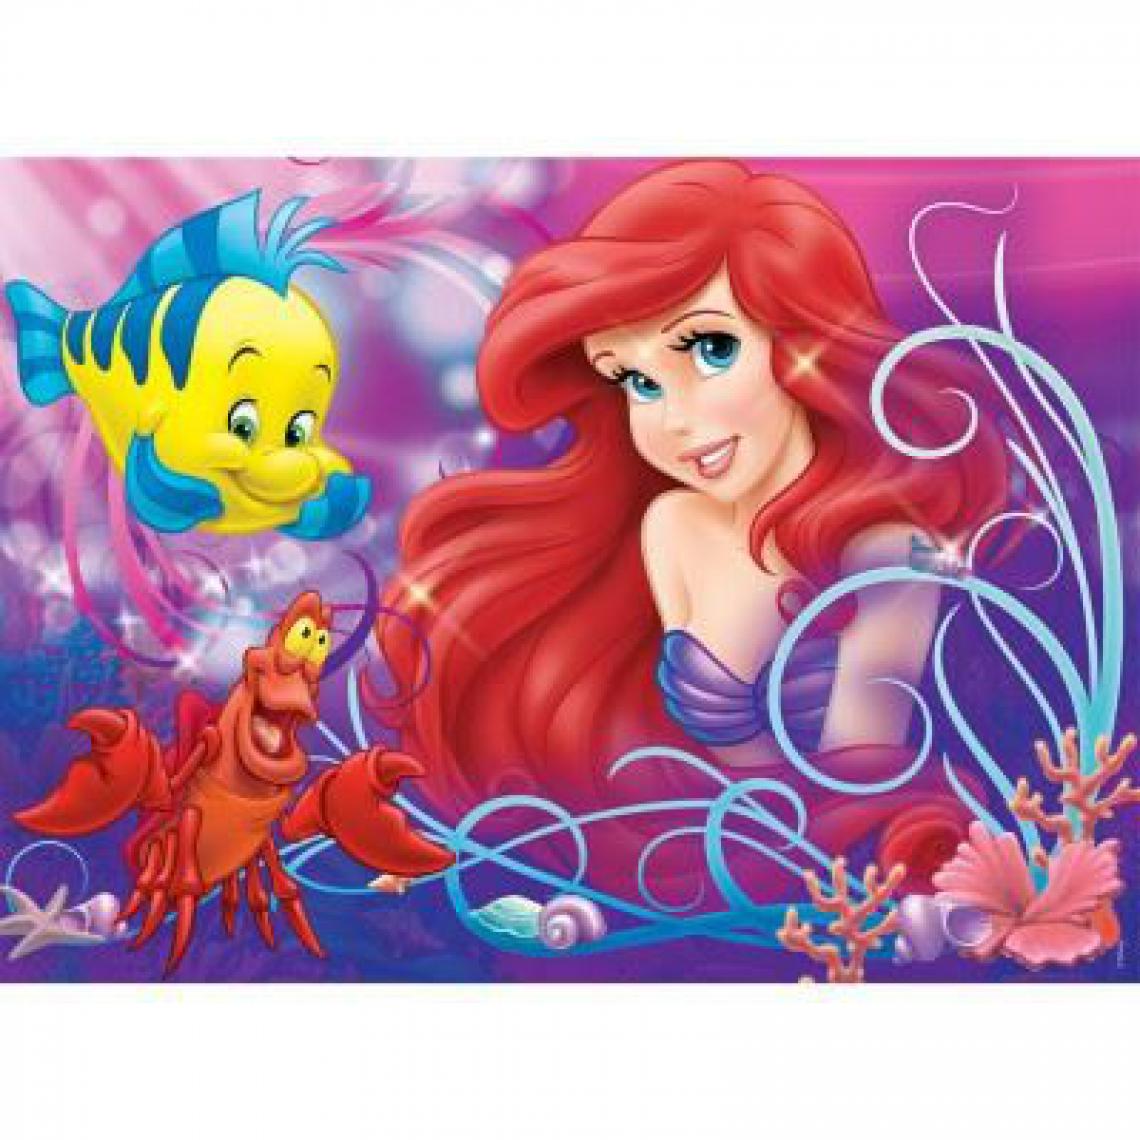 Icaverne - PUZZLE RAVENSBURGER - Puzzle 60 pieces Jolie petite sirene / Disney Ariel - Animaux